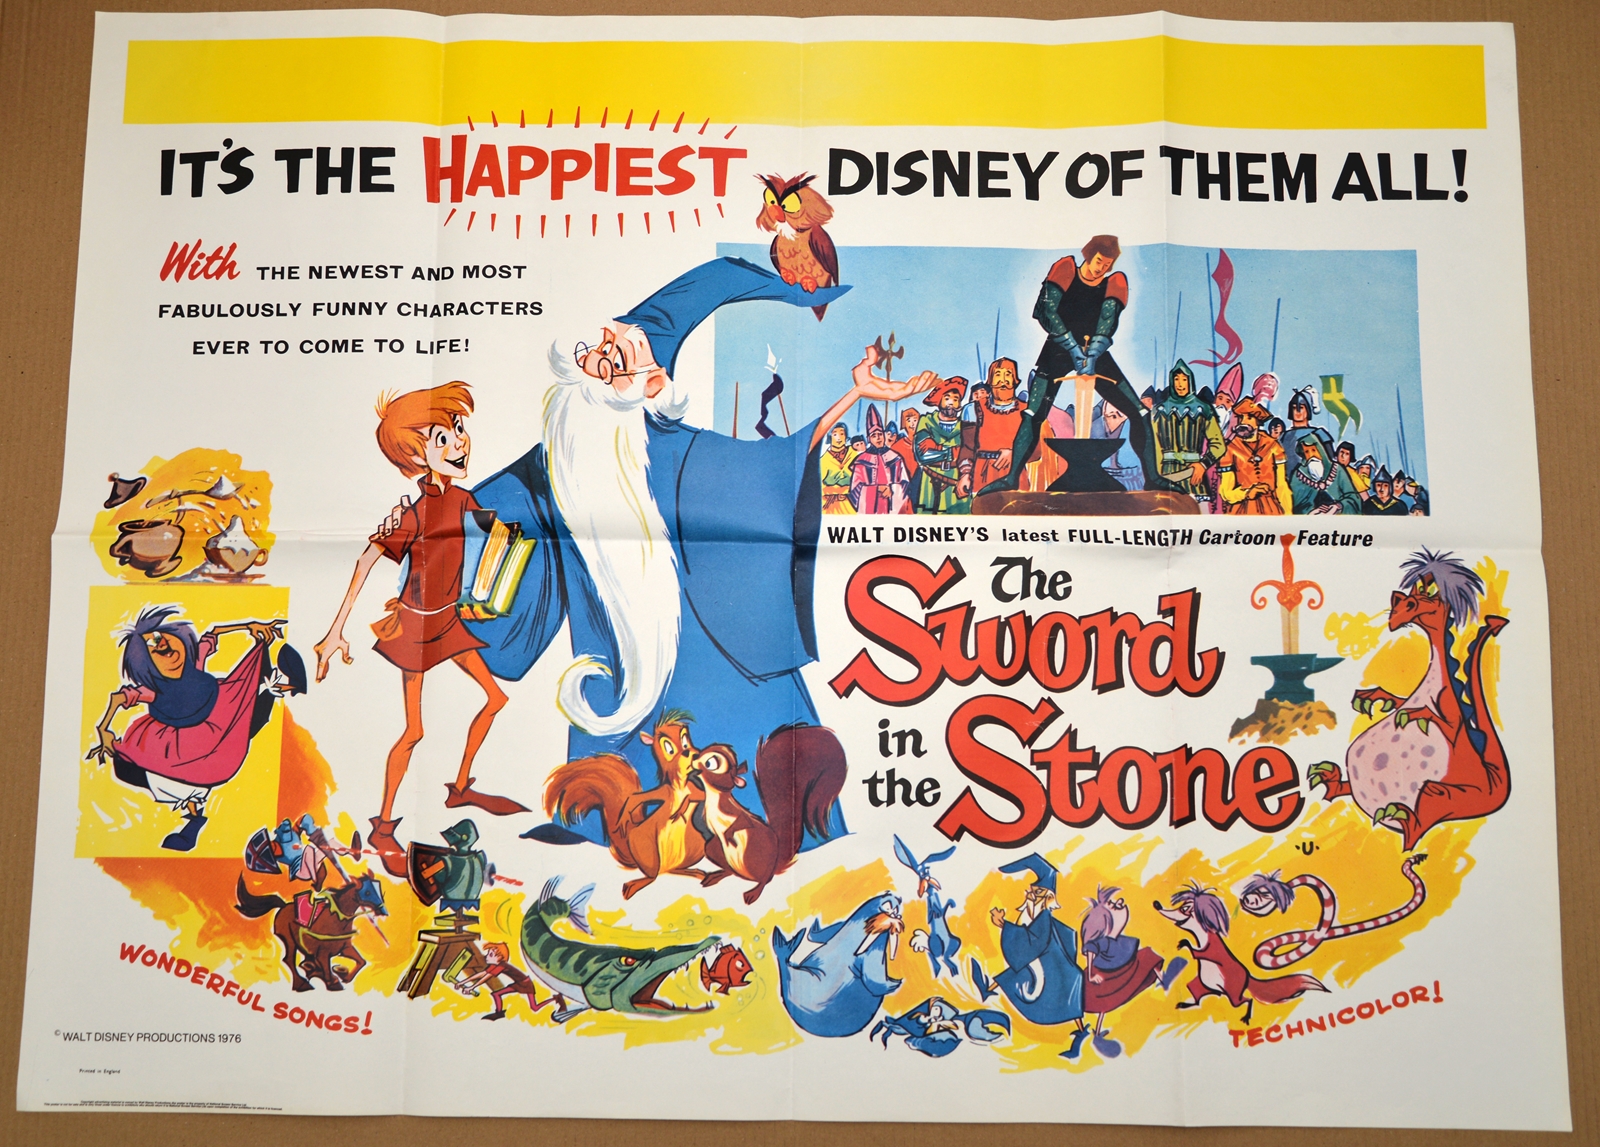 THE SWORD IN THE STONE (1963) - (1976 re-release) British UK Quad film poster - Walt Disney